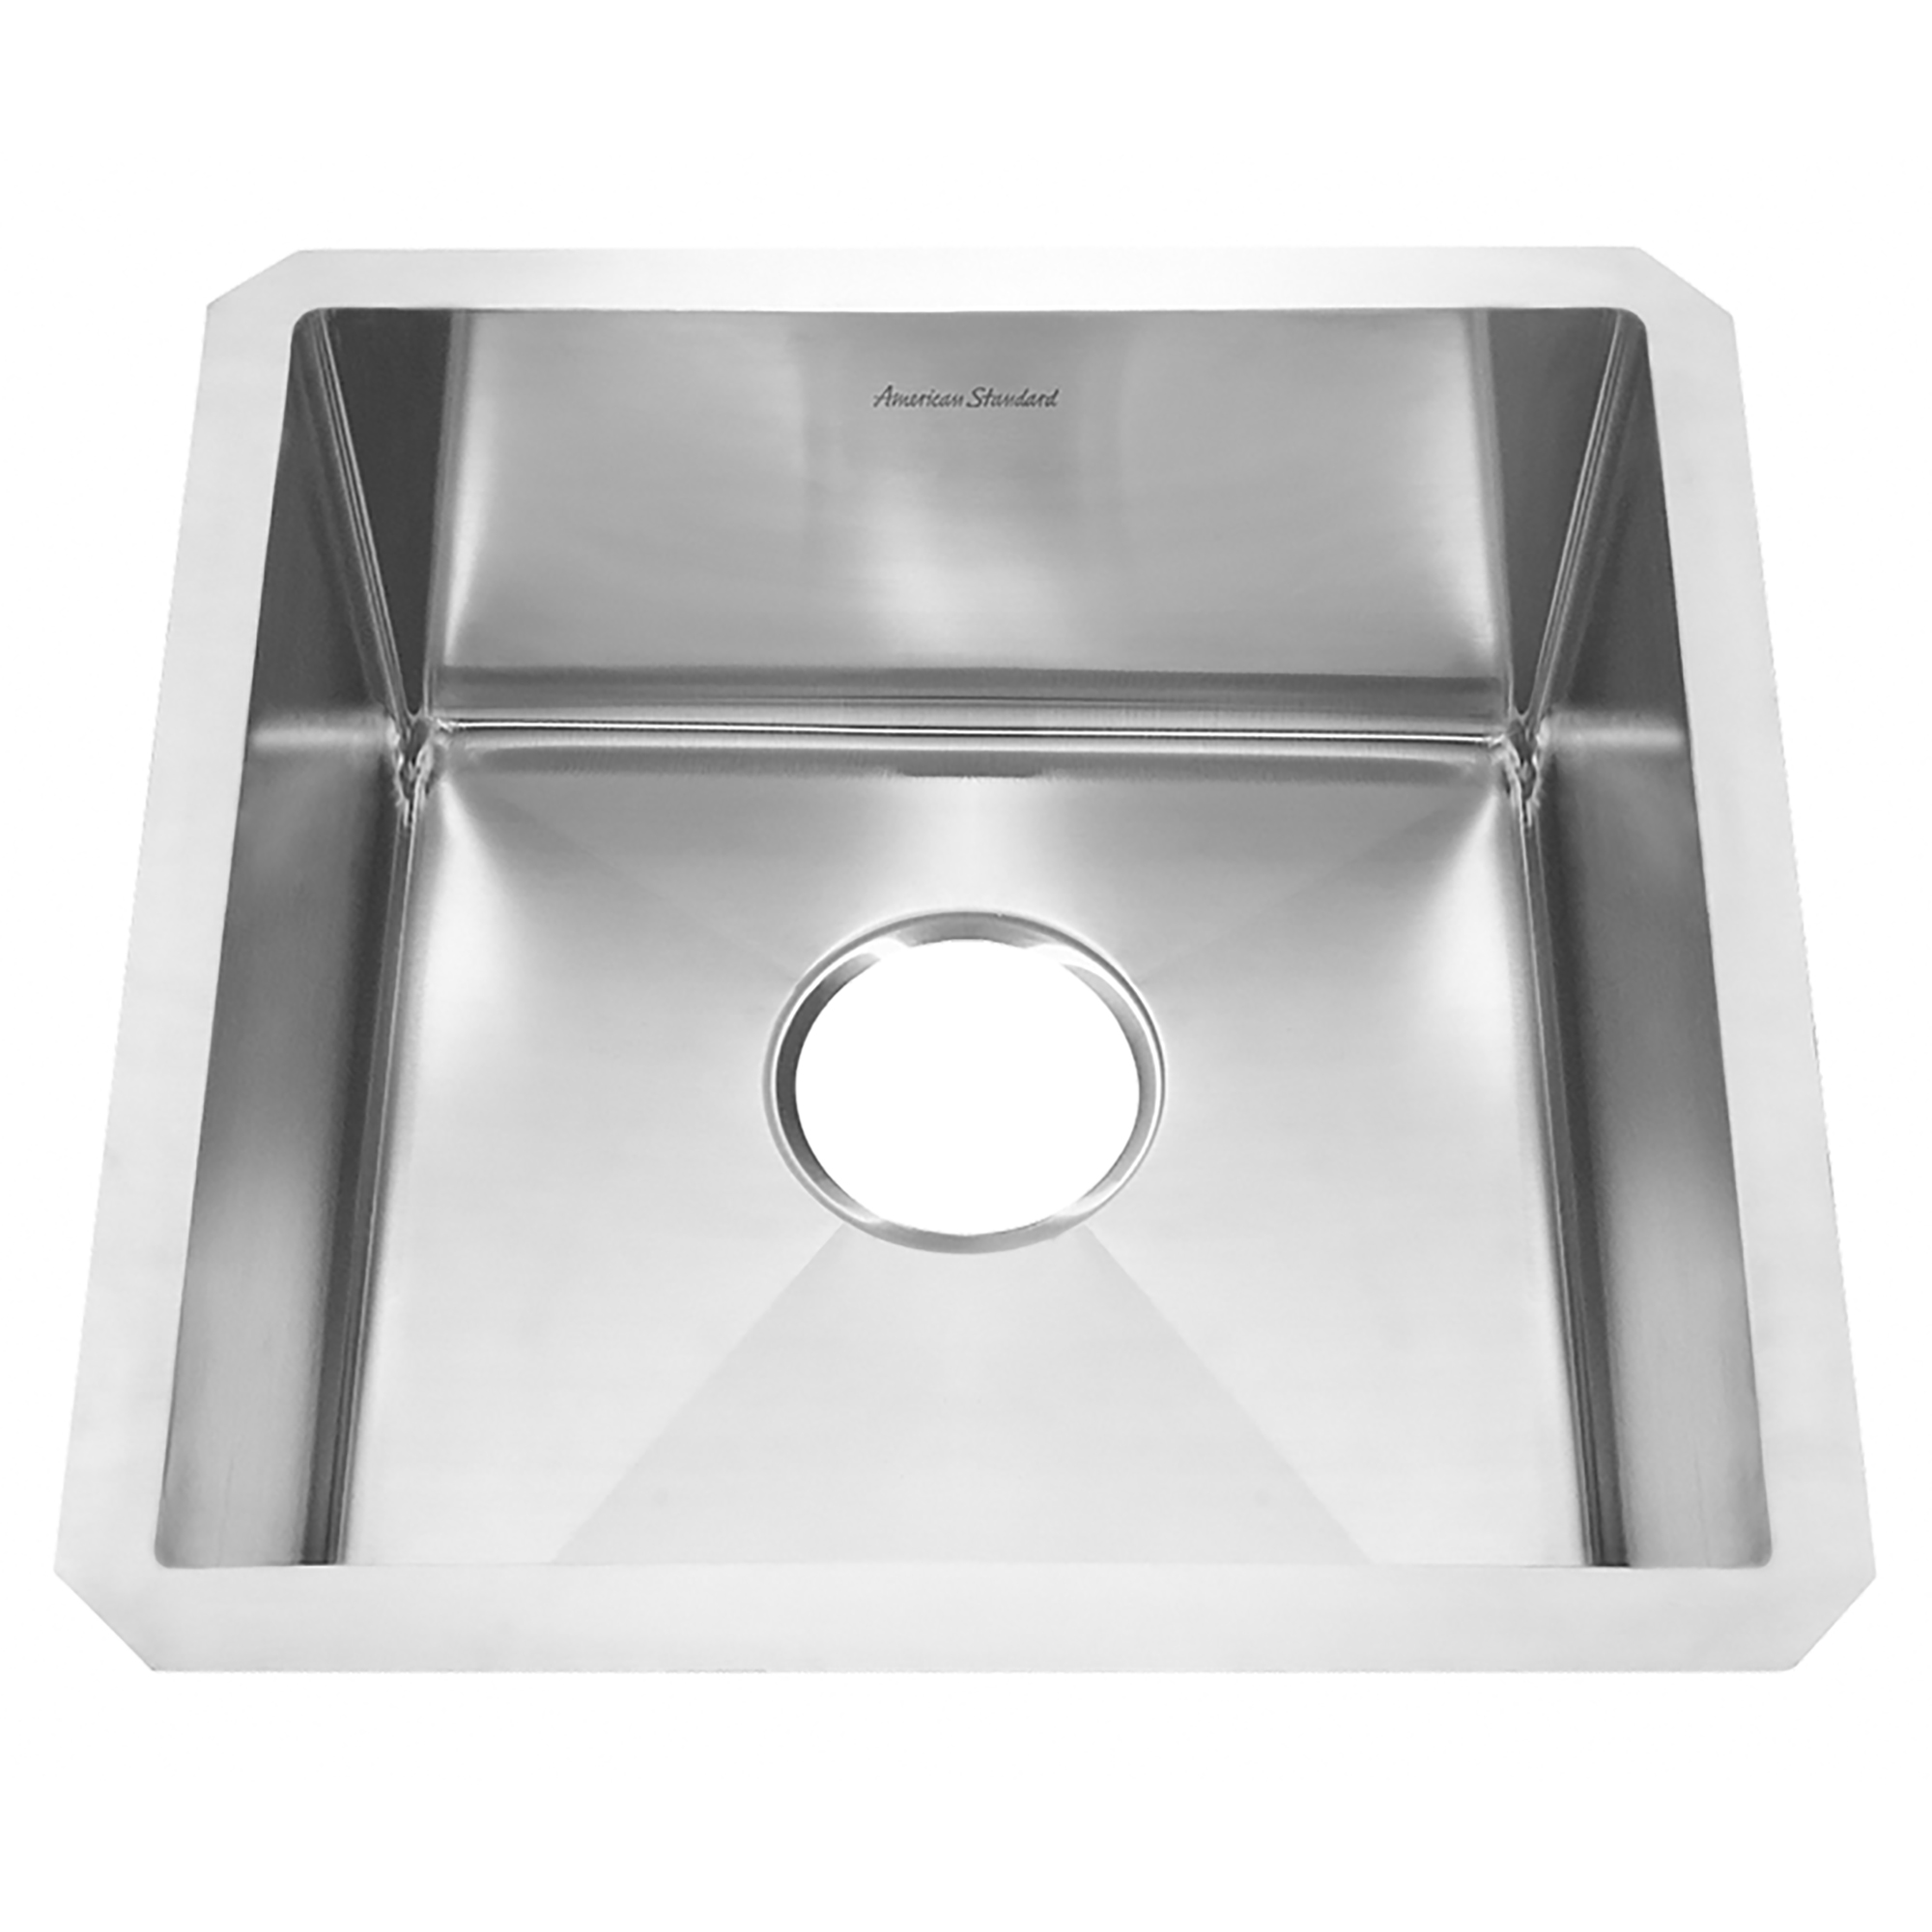 Pekoe® 17 x 17-Inch Stainless Steel Undermount Single Bowl Kitchen Sink